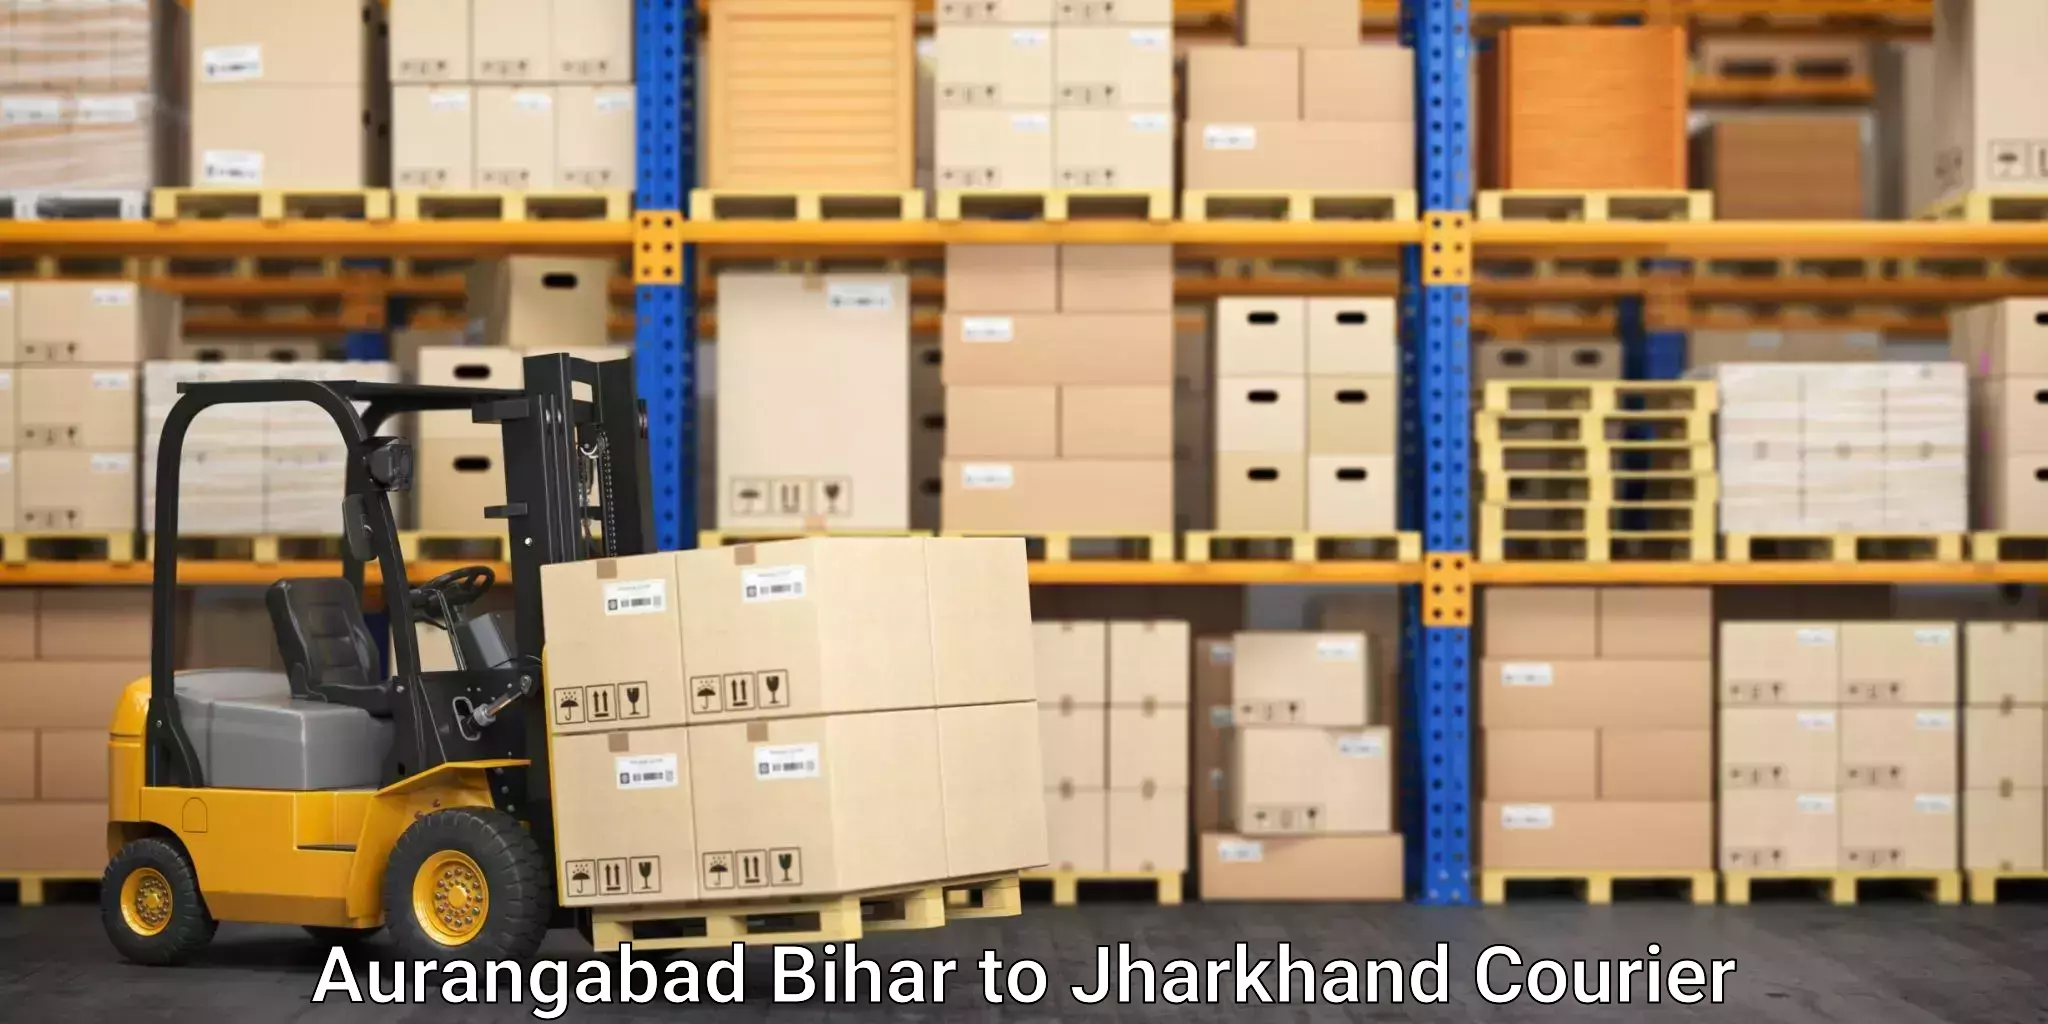 Household transport experts Aurangabad Bihar to Jharkhand